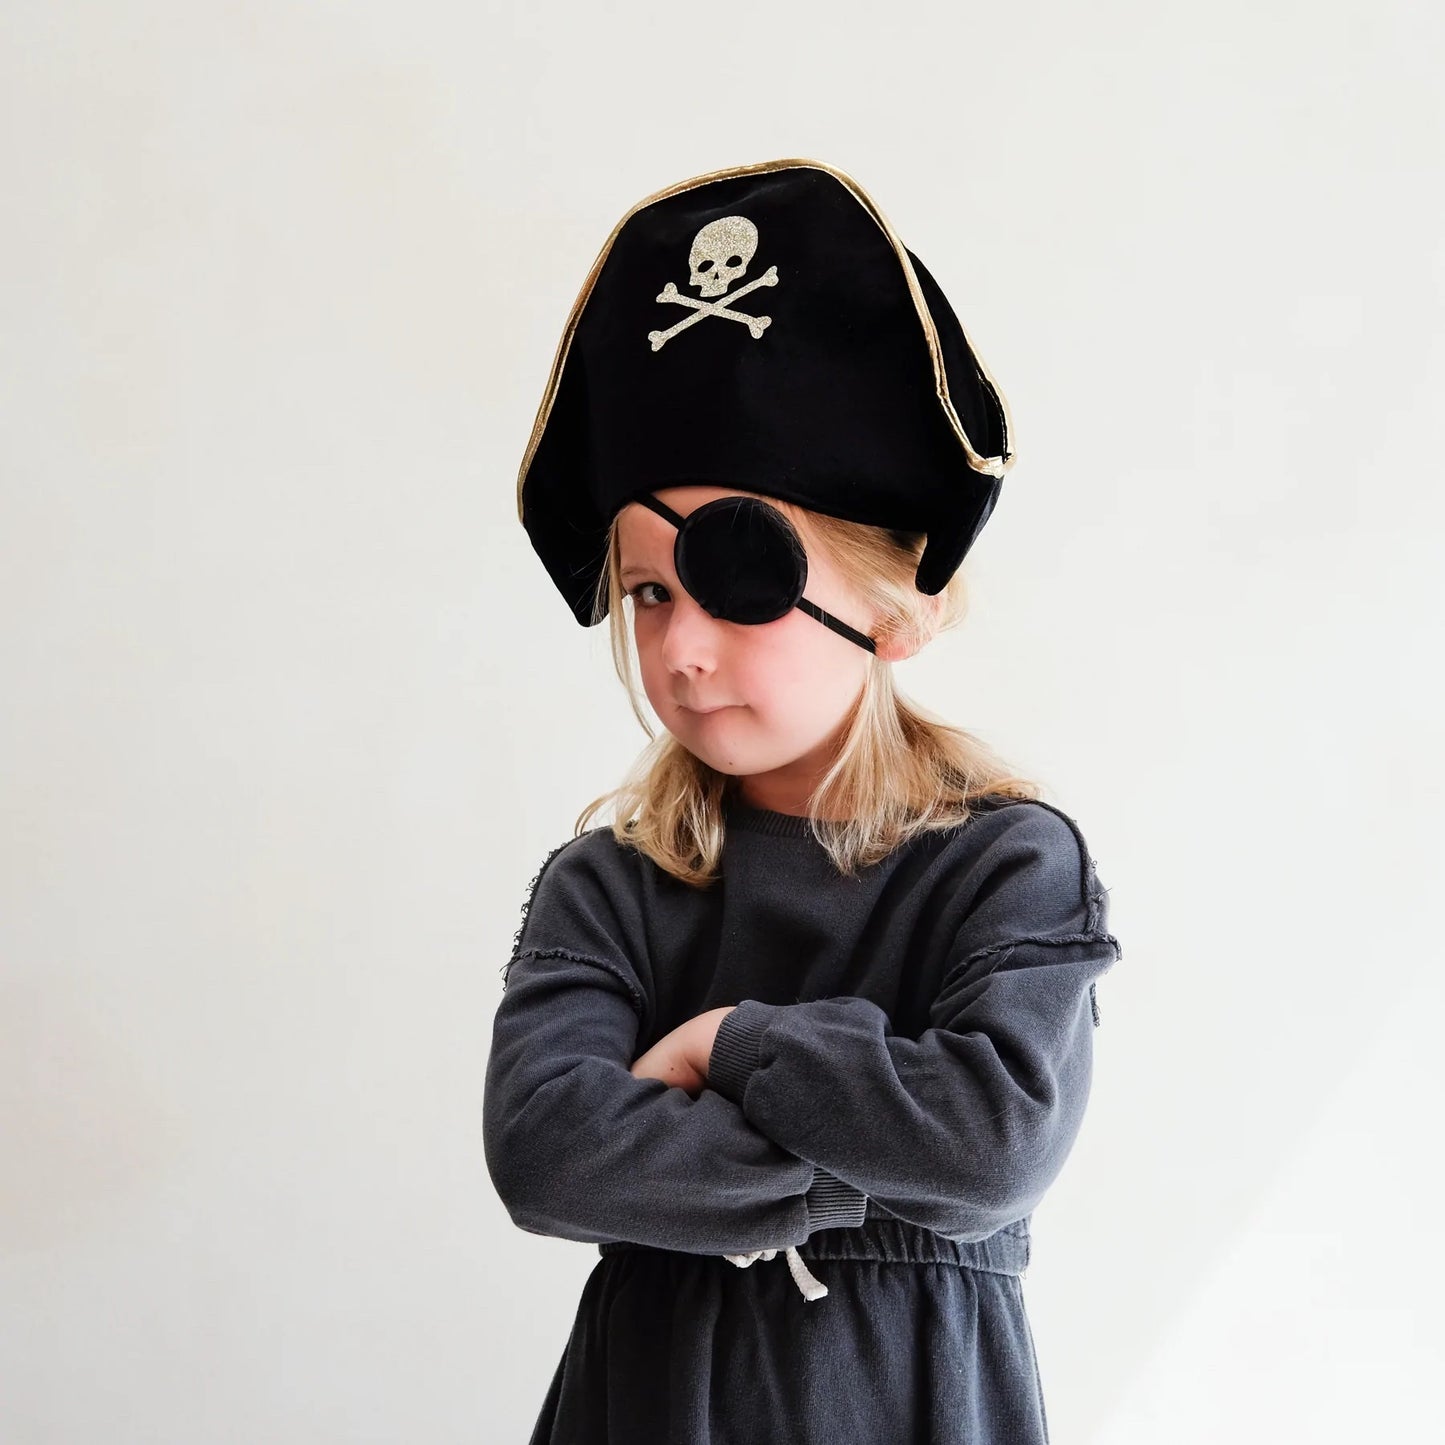 Pirate Dress-Up Set